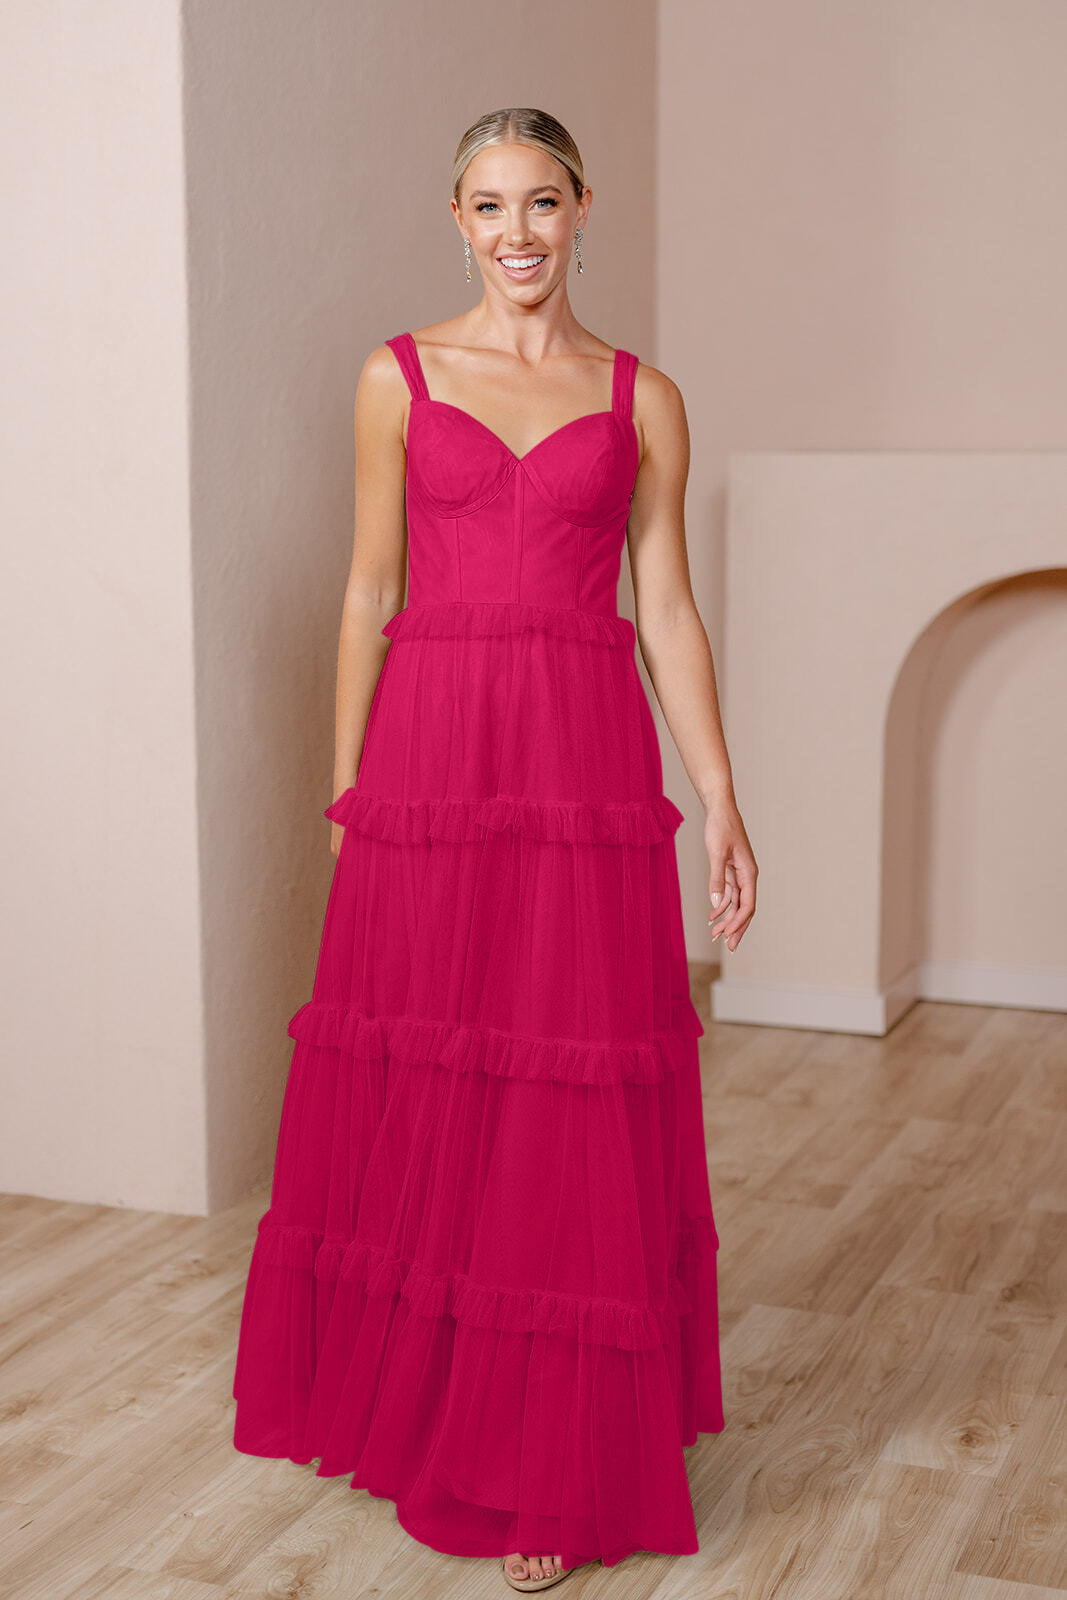 Peony Bridesmaid Dress at Revelry | Sloane Tulle Dress | Made to Order Peony